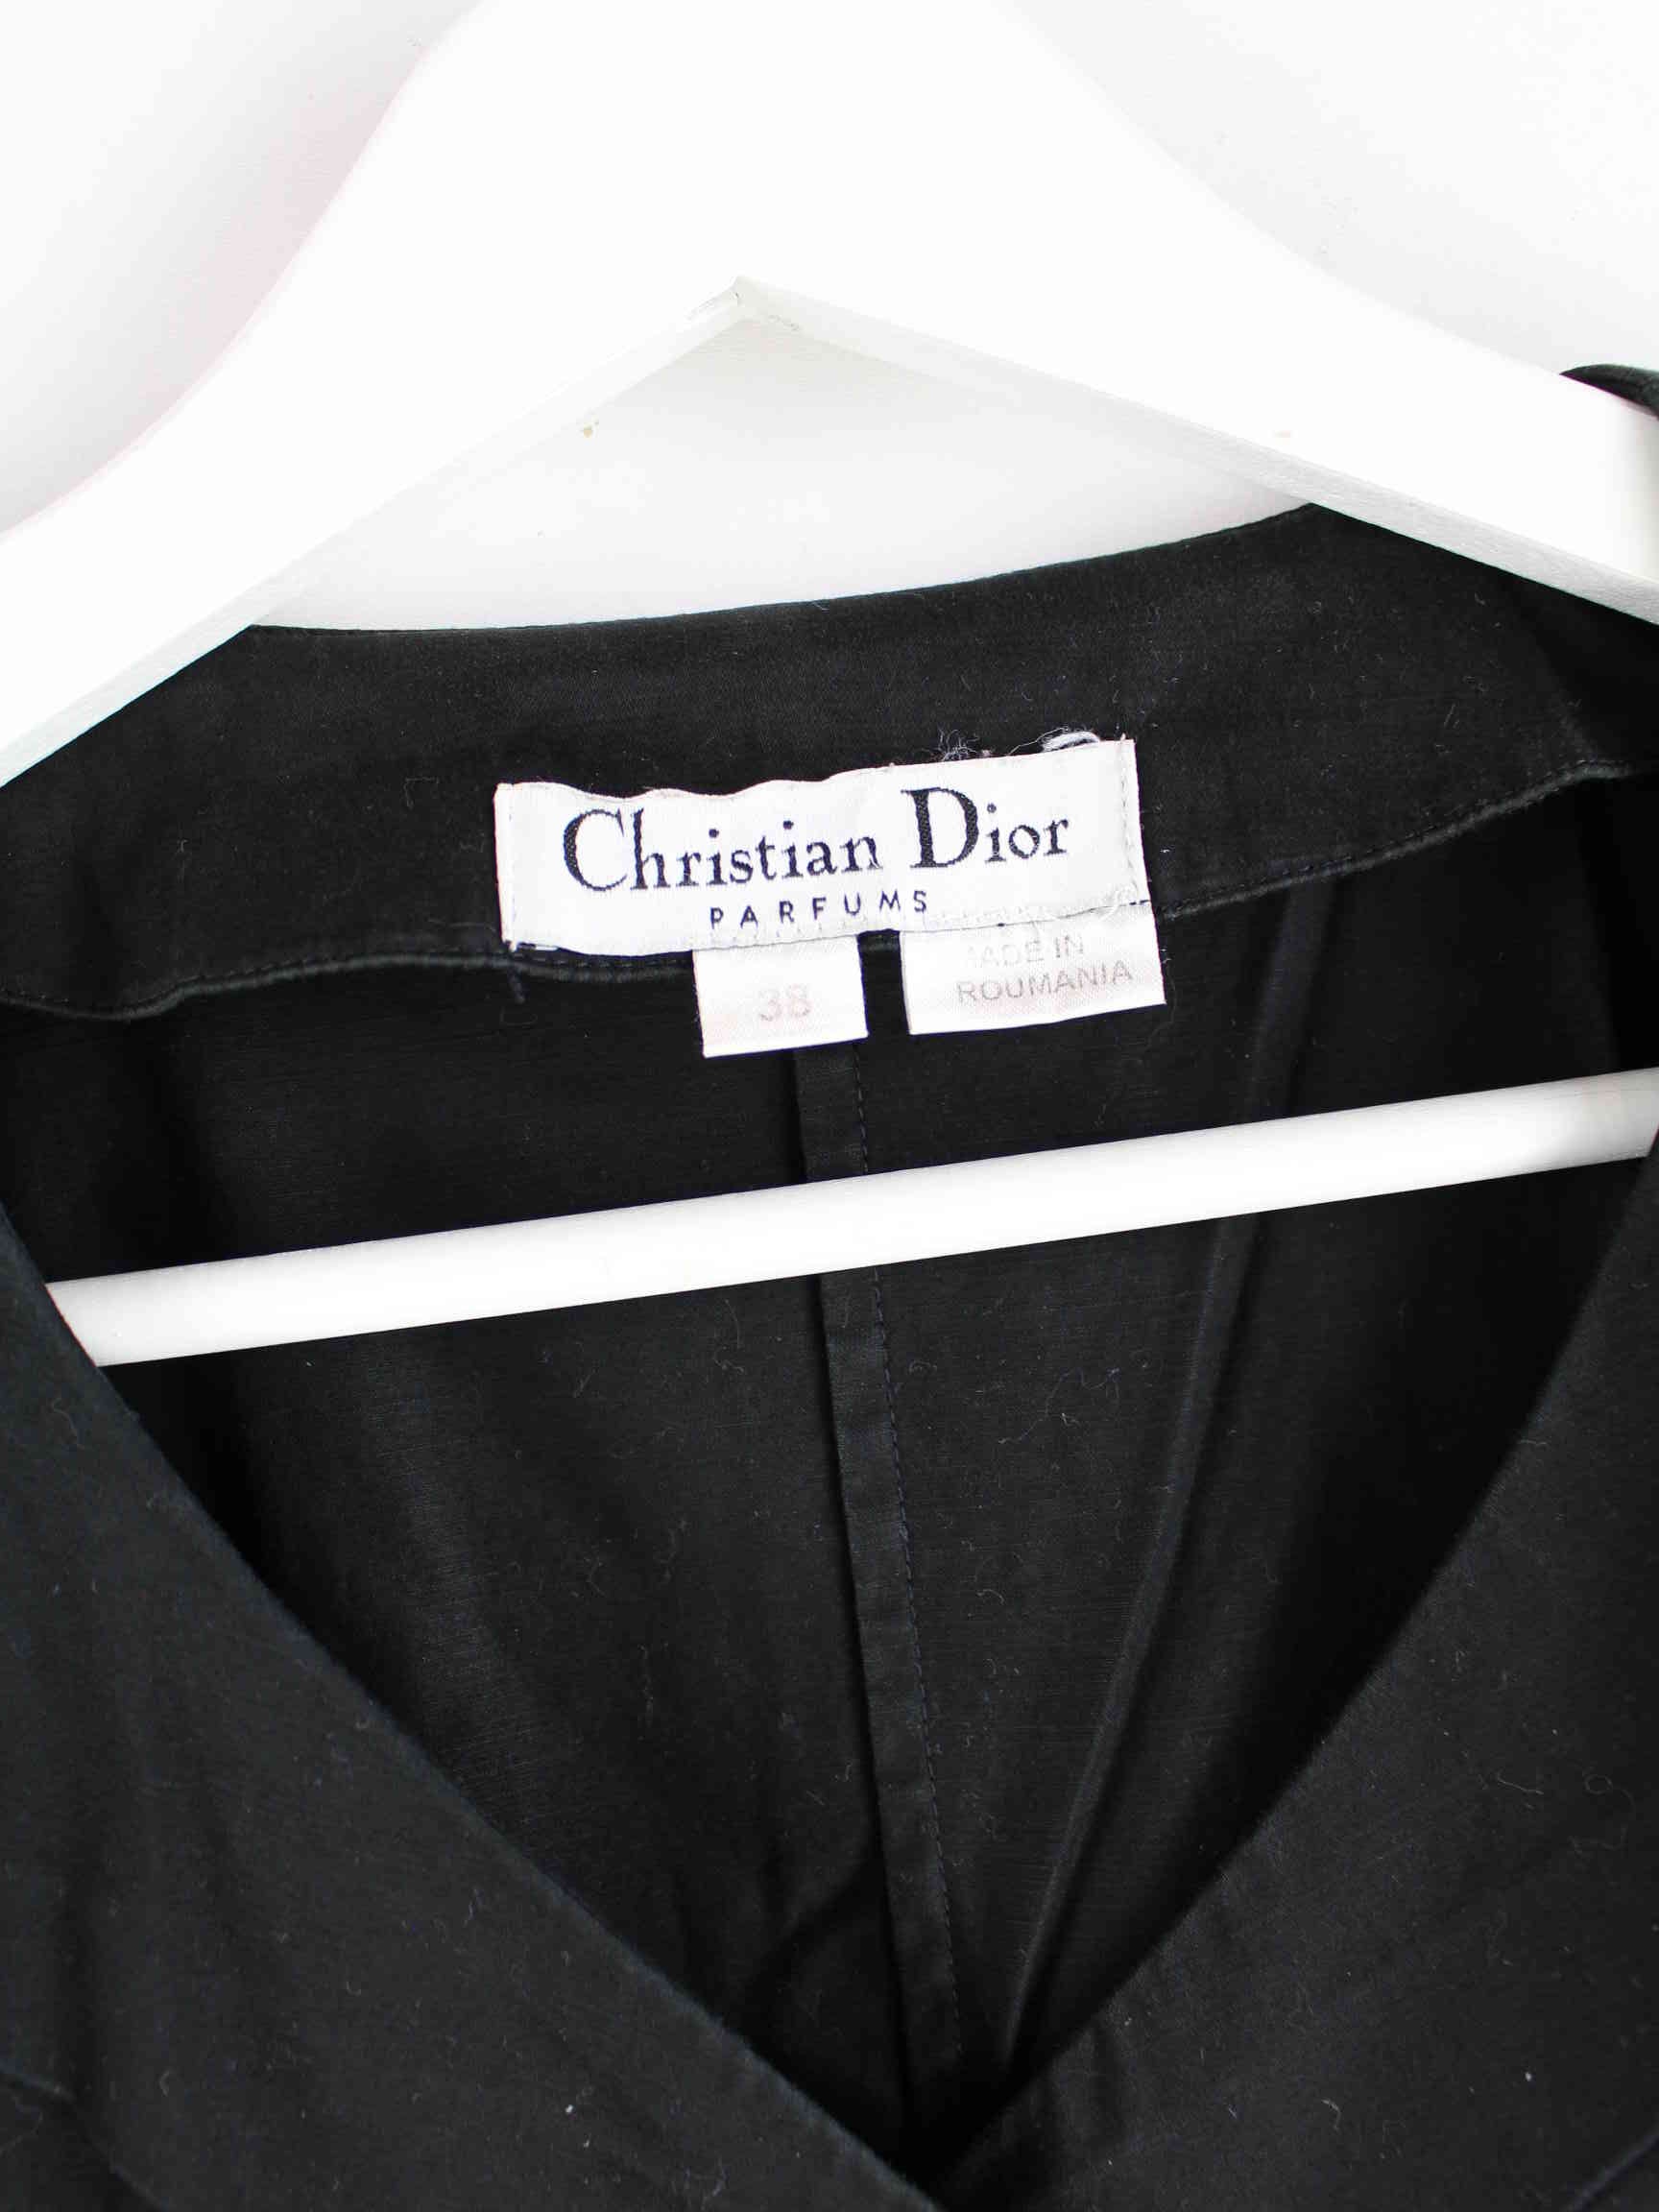 Christian Dior Parfums Bluse Schwarz M (detail image 1)